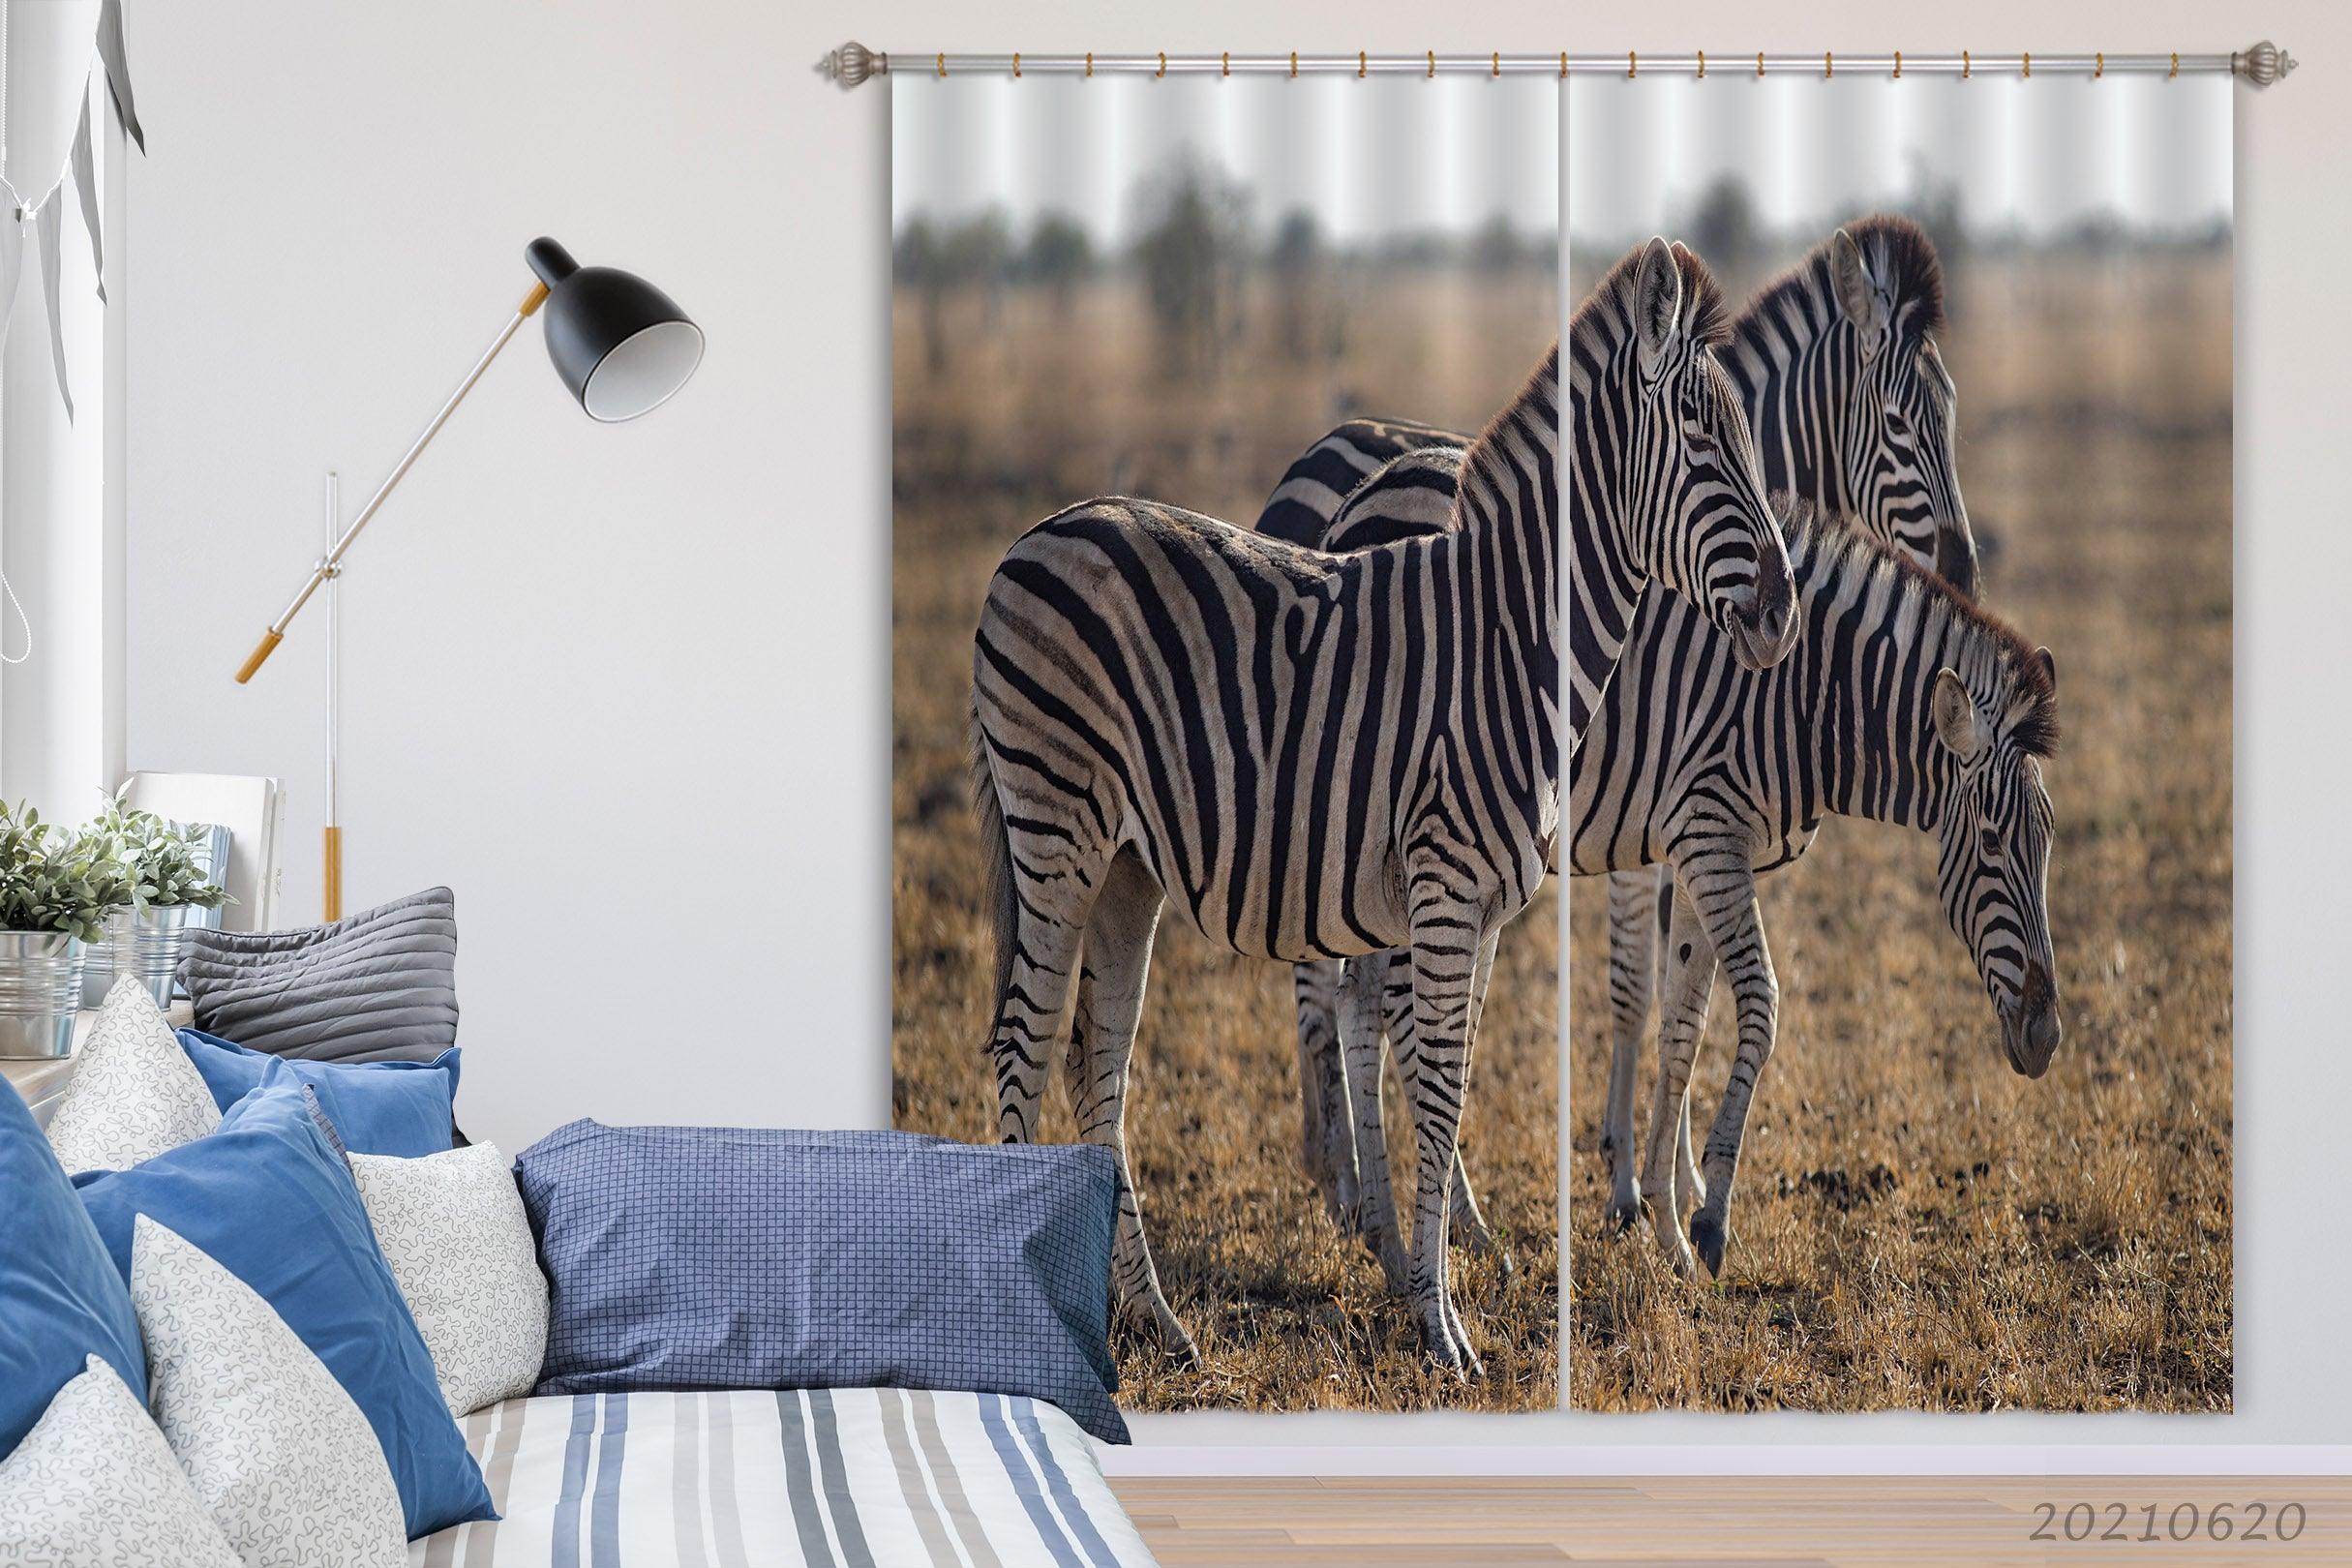 3D Zebra Prairie Pattern Curtains and Drapes GD 894- Jess Art Decoration